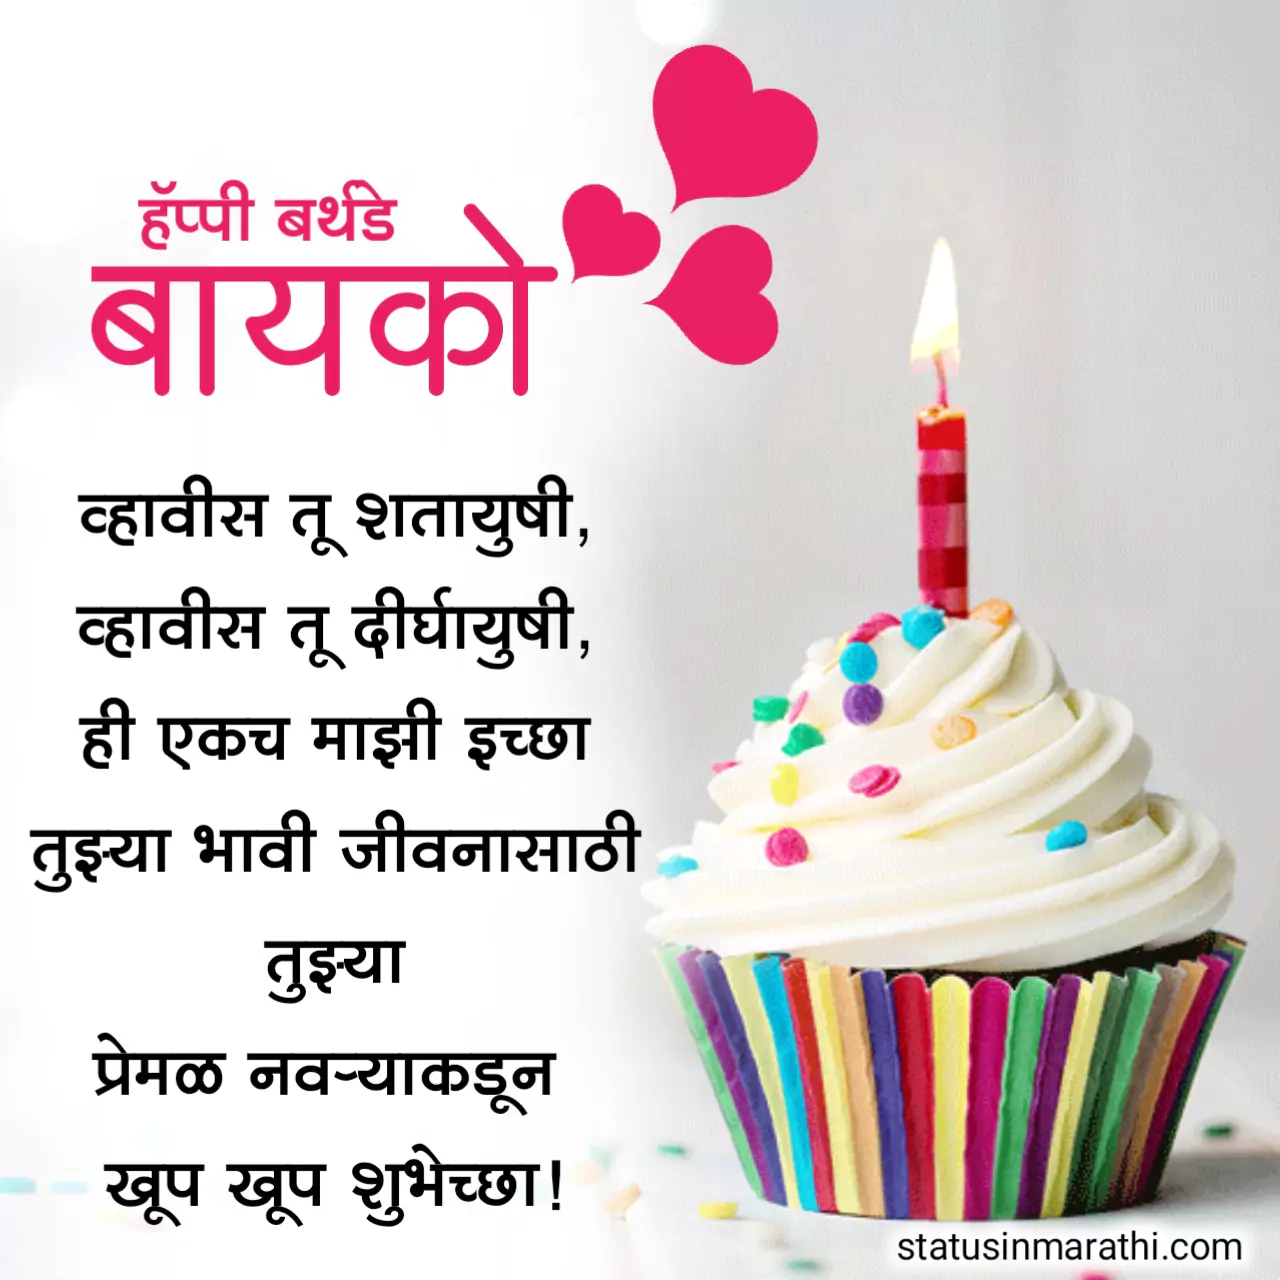 Happy Birthday Status for wife in marathi